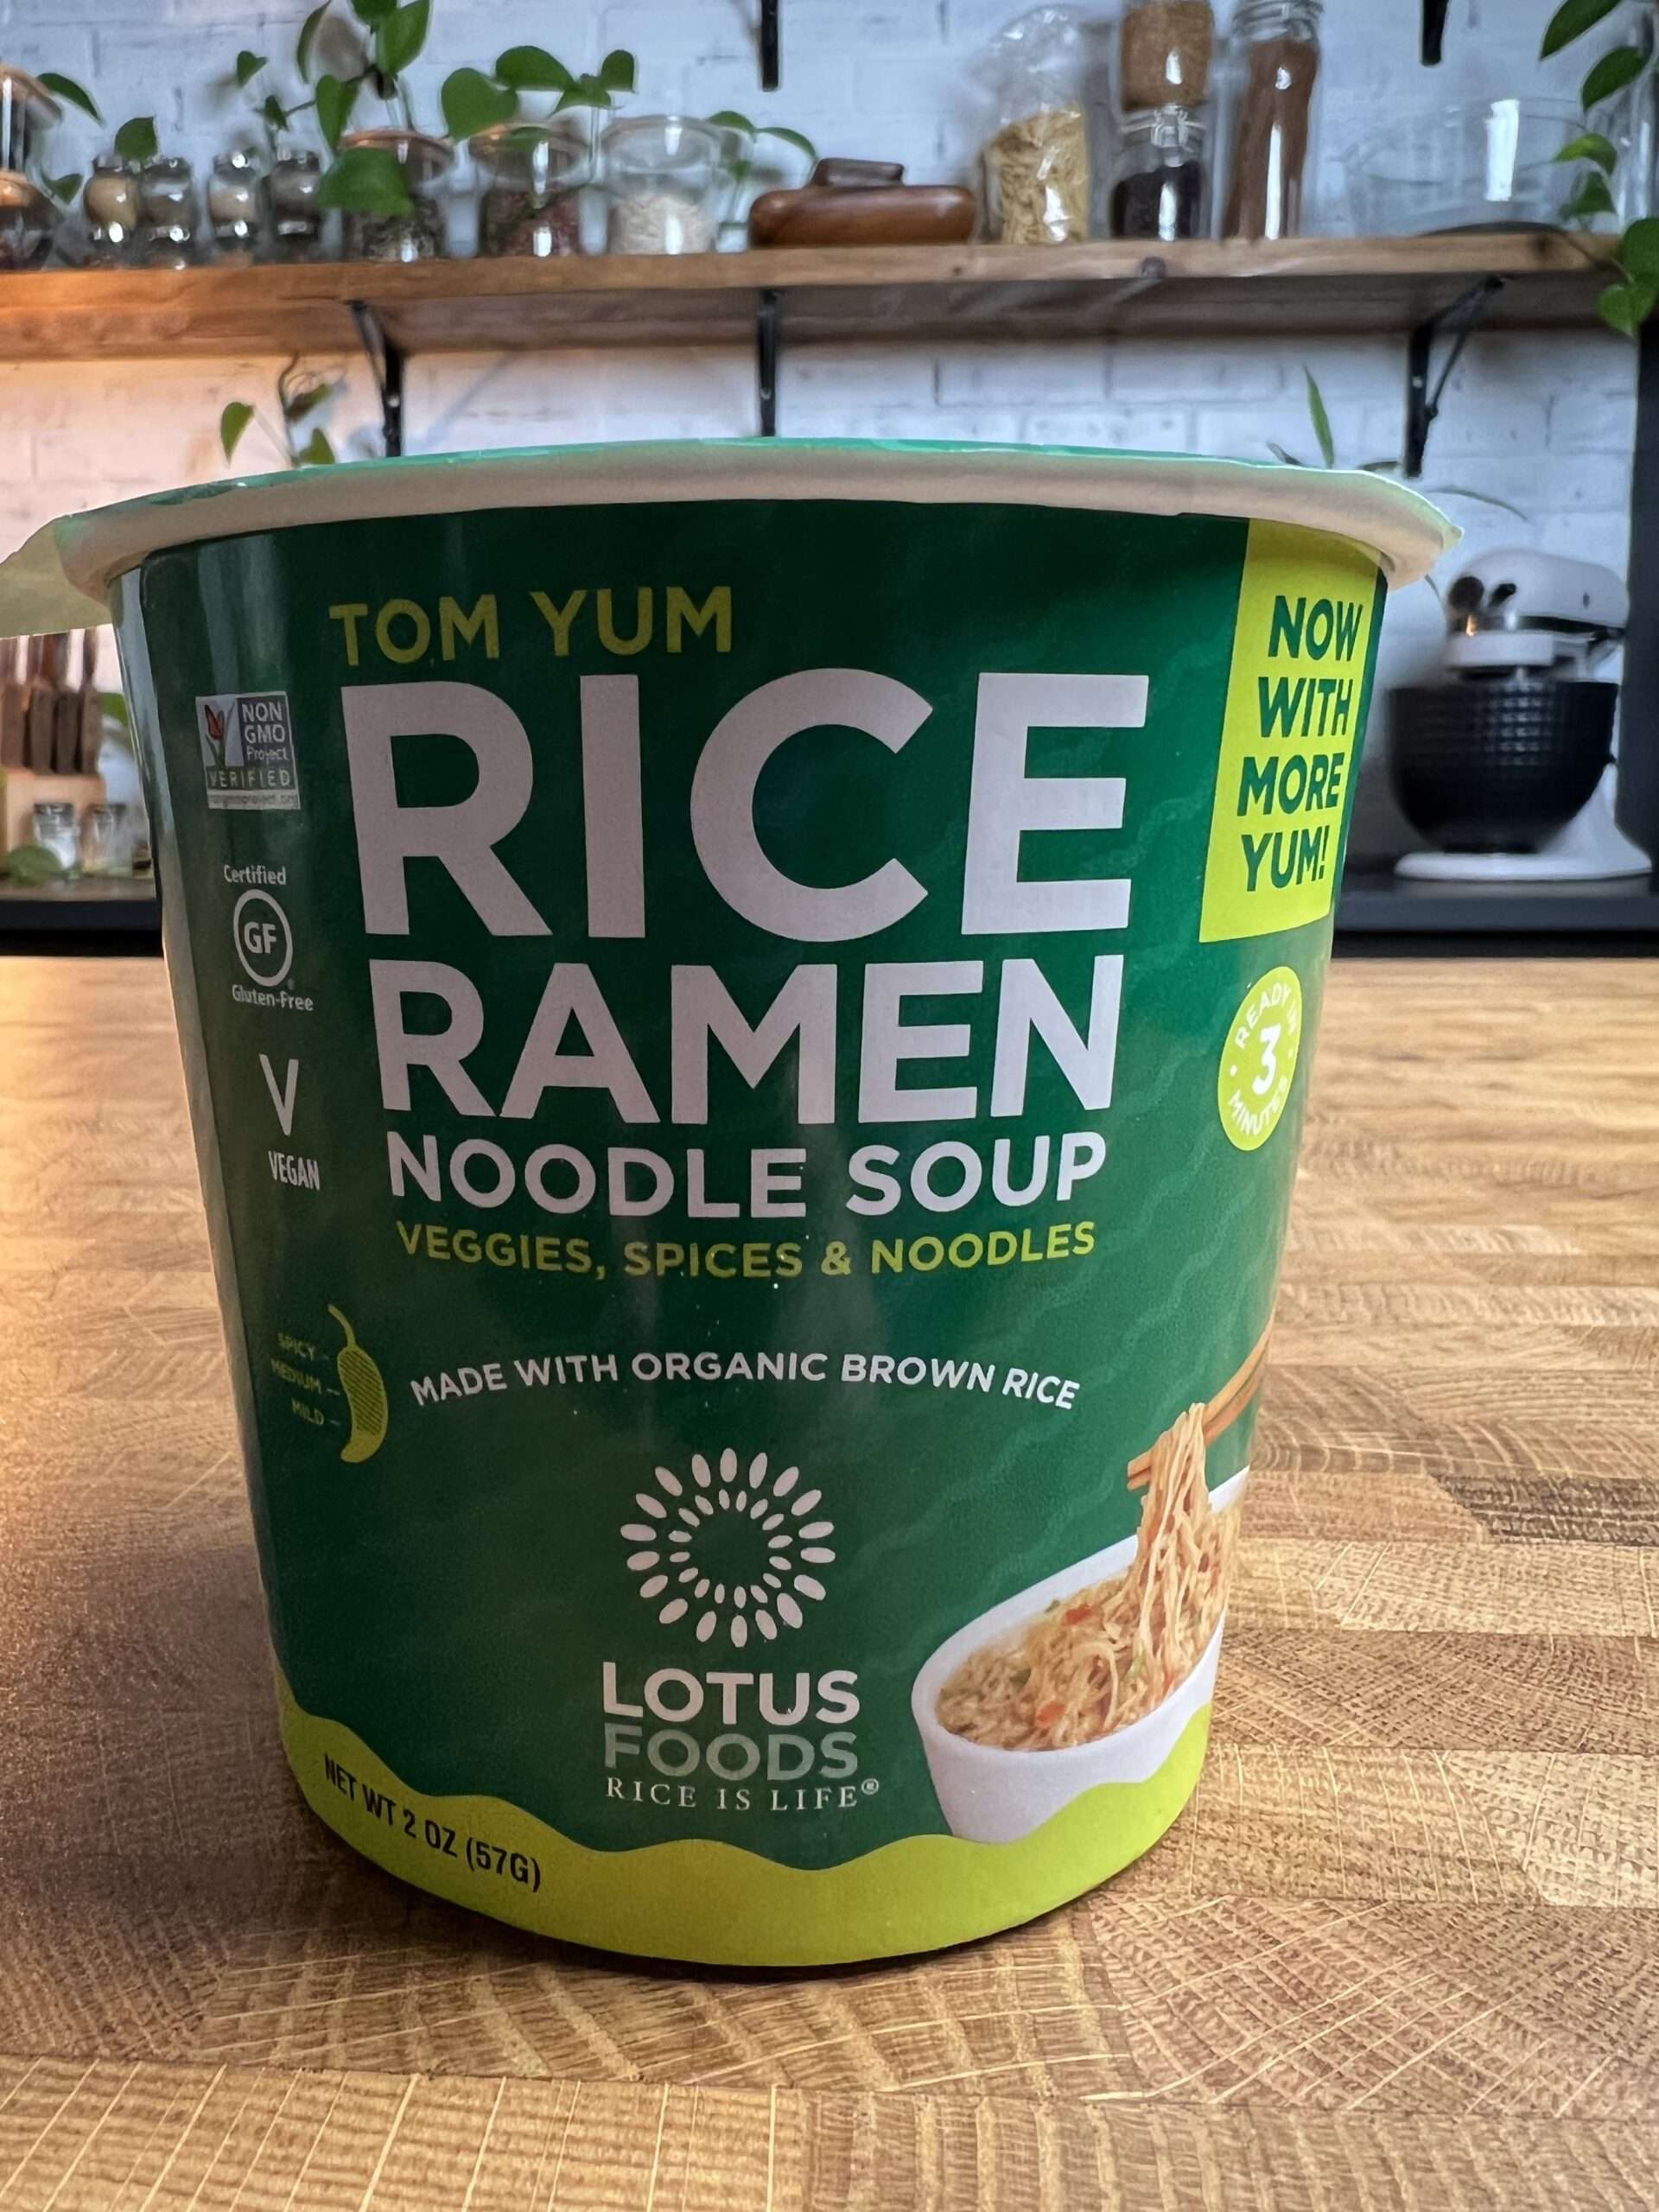 Tom Yum rice ramen noodle soup.